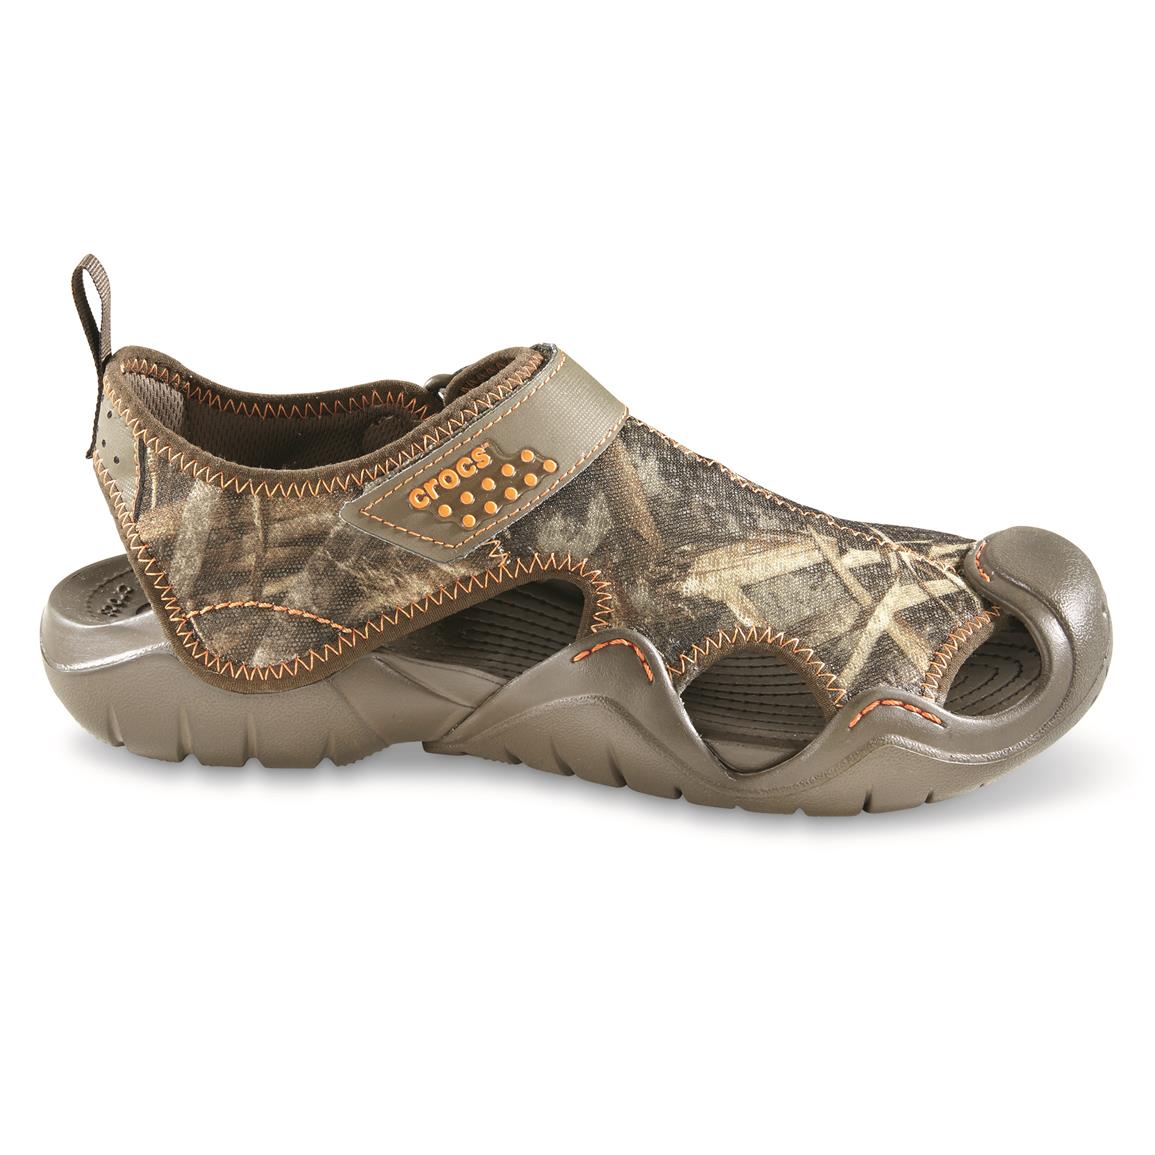  Crocs  Men s Swiftwater  Realtree MAX 5 Sandals 676207 